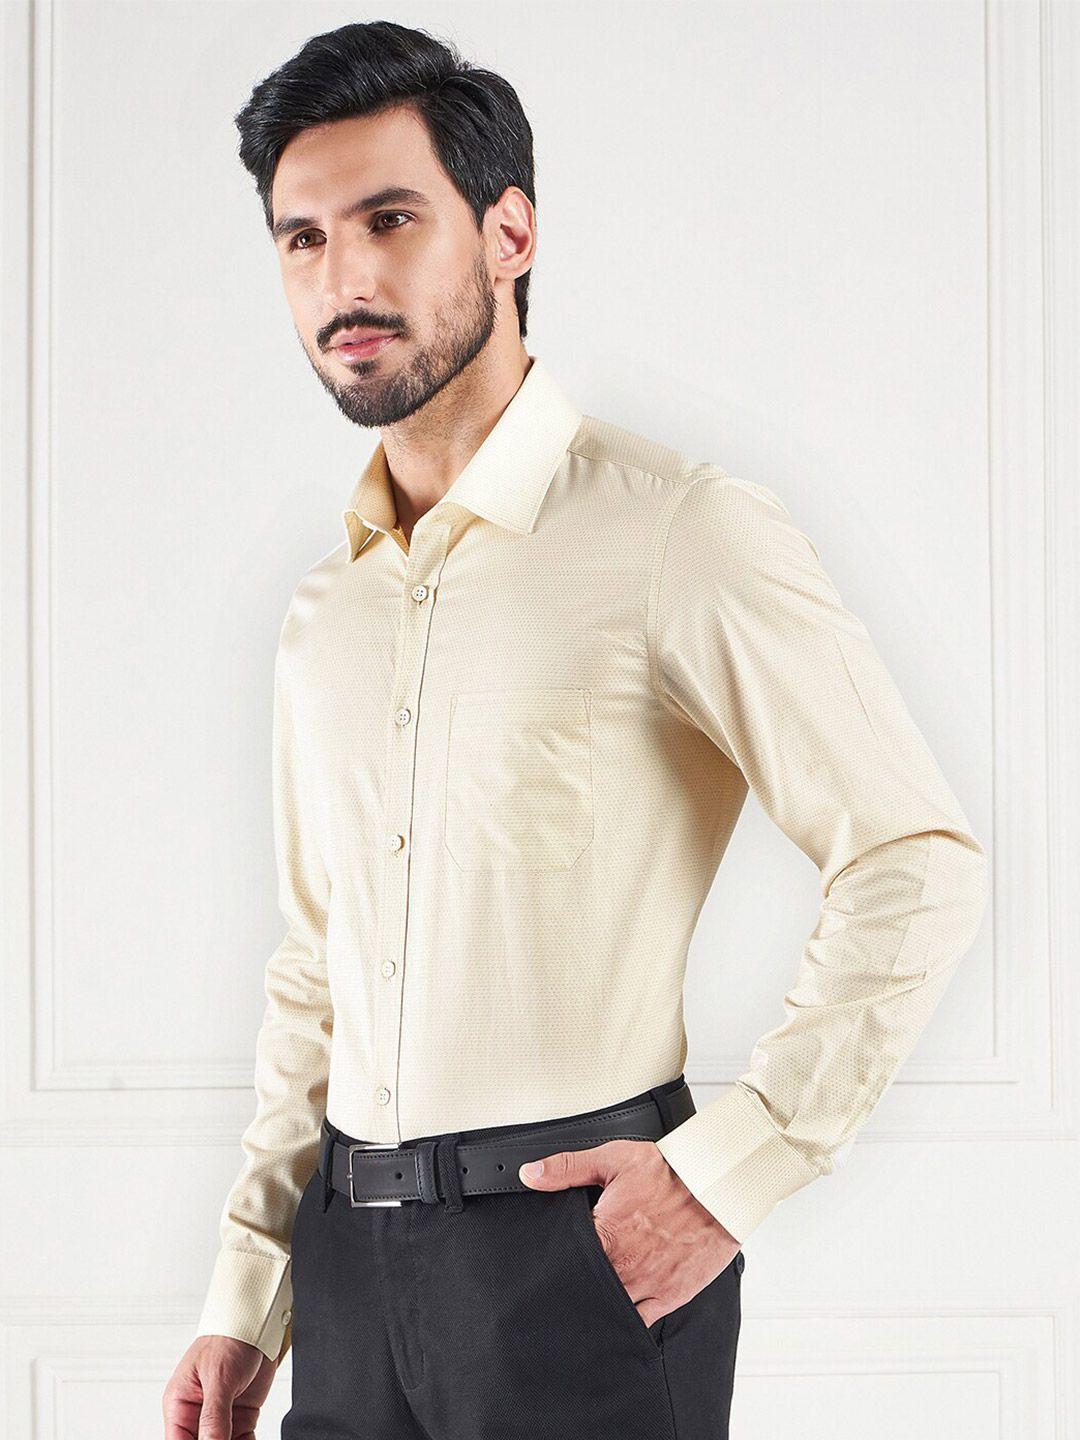 louis stitch cotton comfort opaque formal shirt